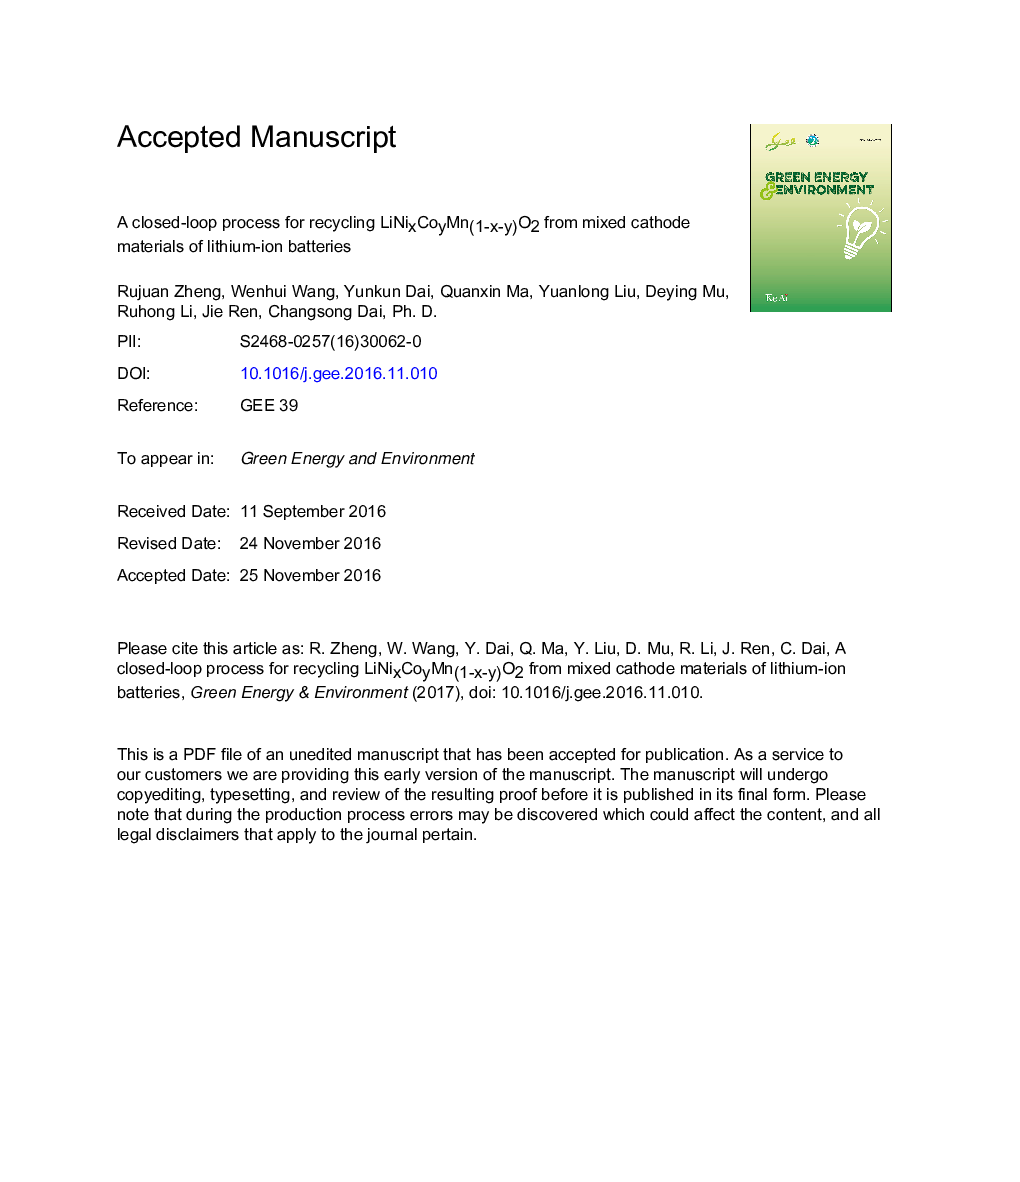 A closed-loop process for recycling LiNixCoyMn(1âxây)O2 from mixed cathode materials of lithium-ion batteries